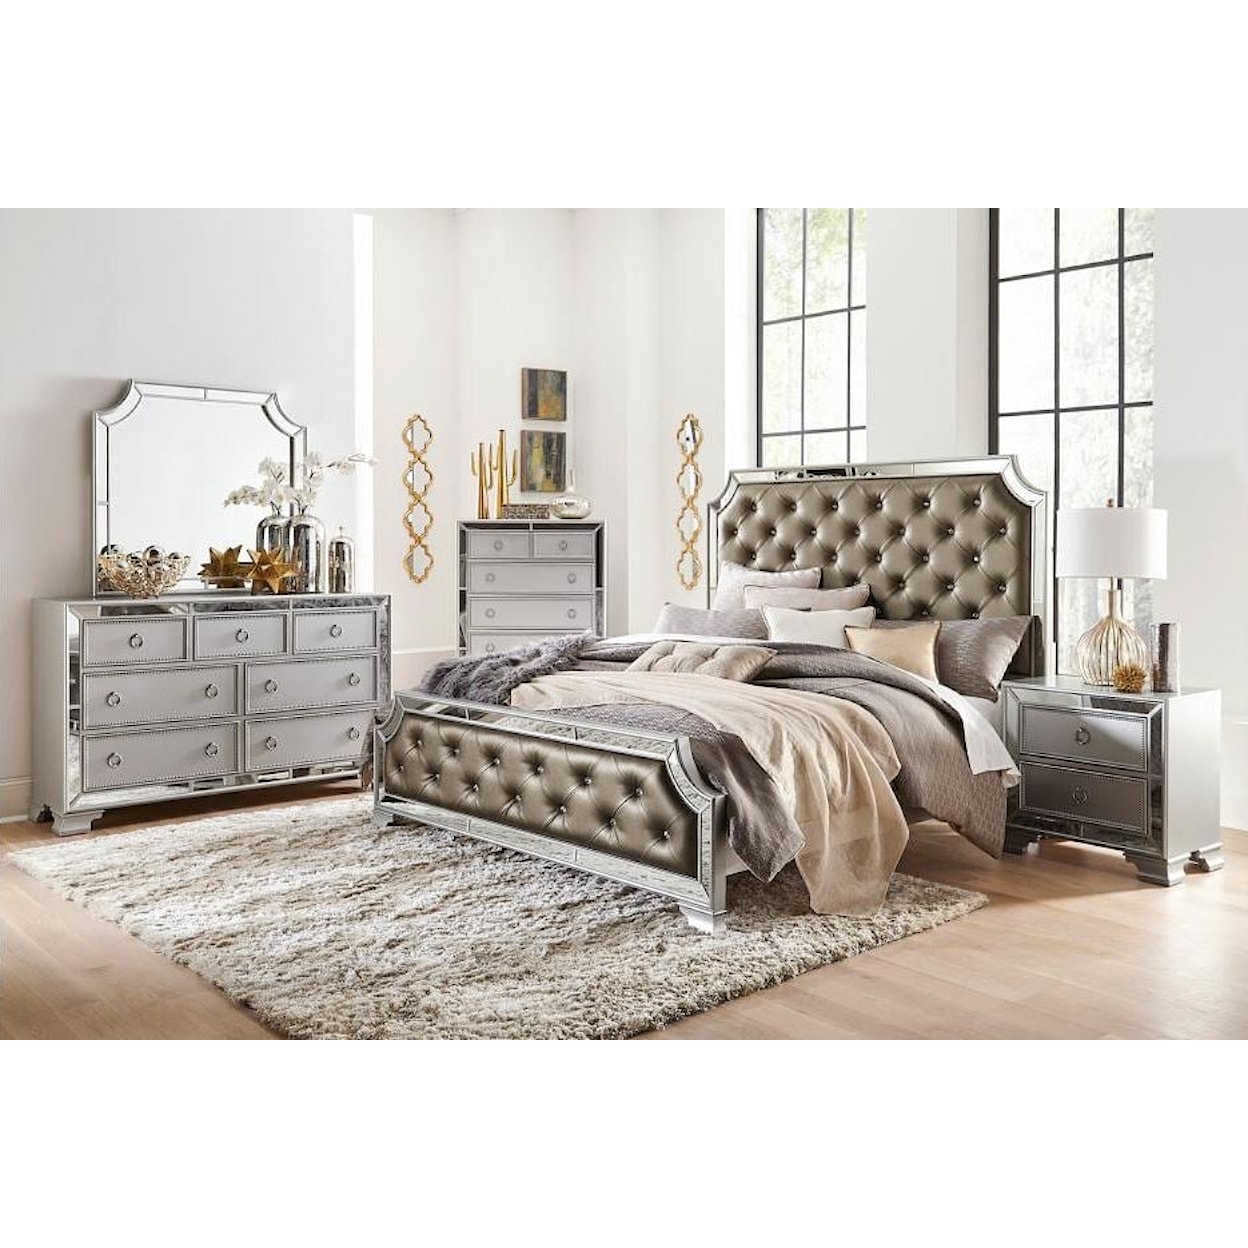 Homelegance Furniture Avondale Queen 5-Piece Bedroom Set